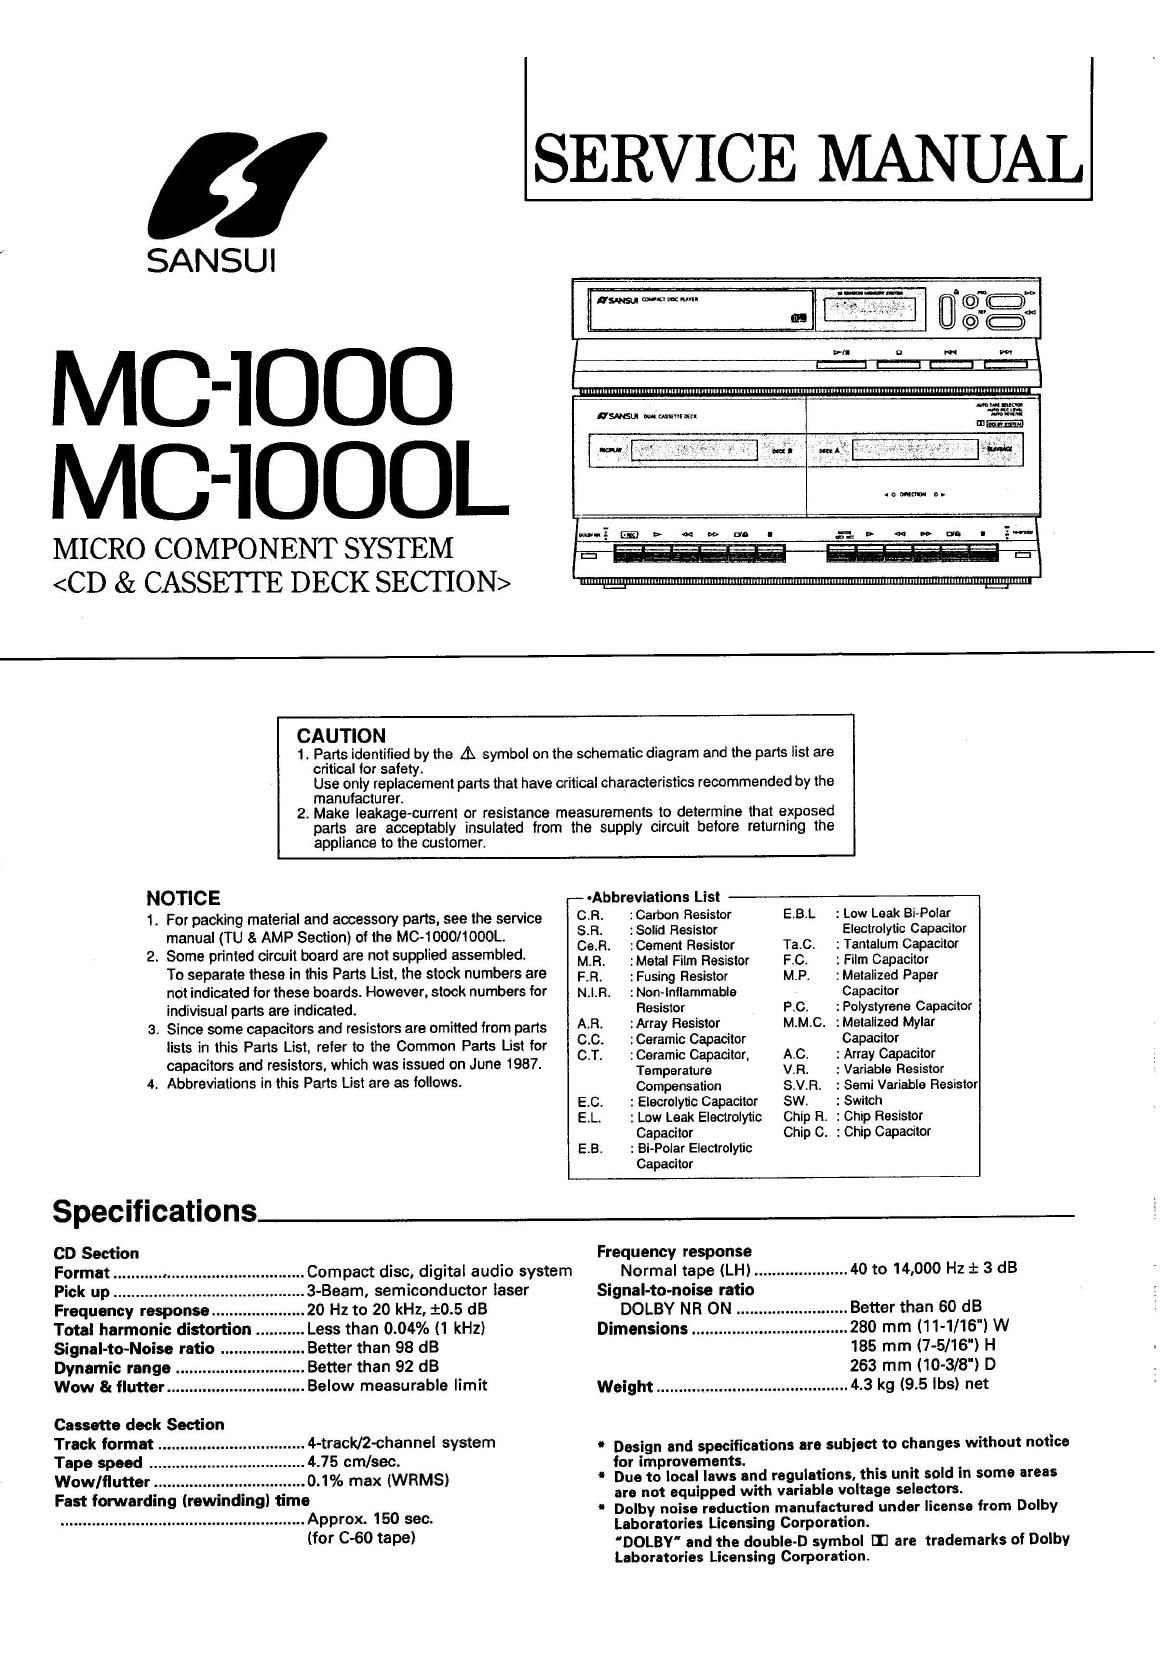 Sansui MC 1000 L Service Manual